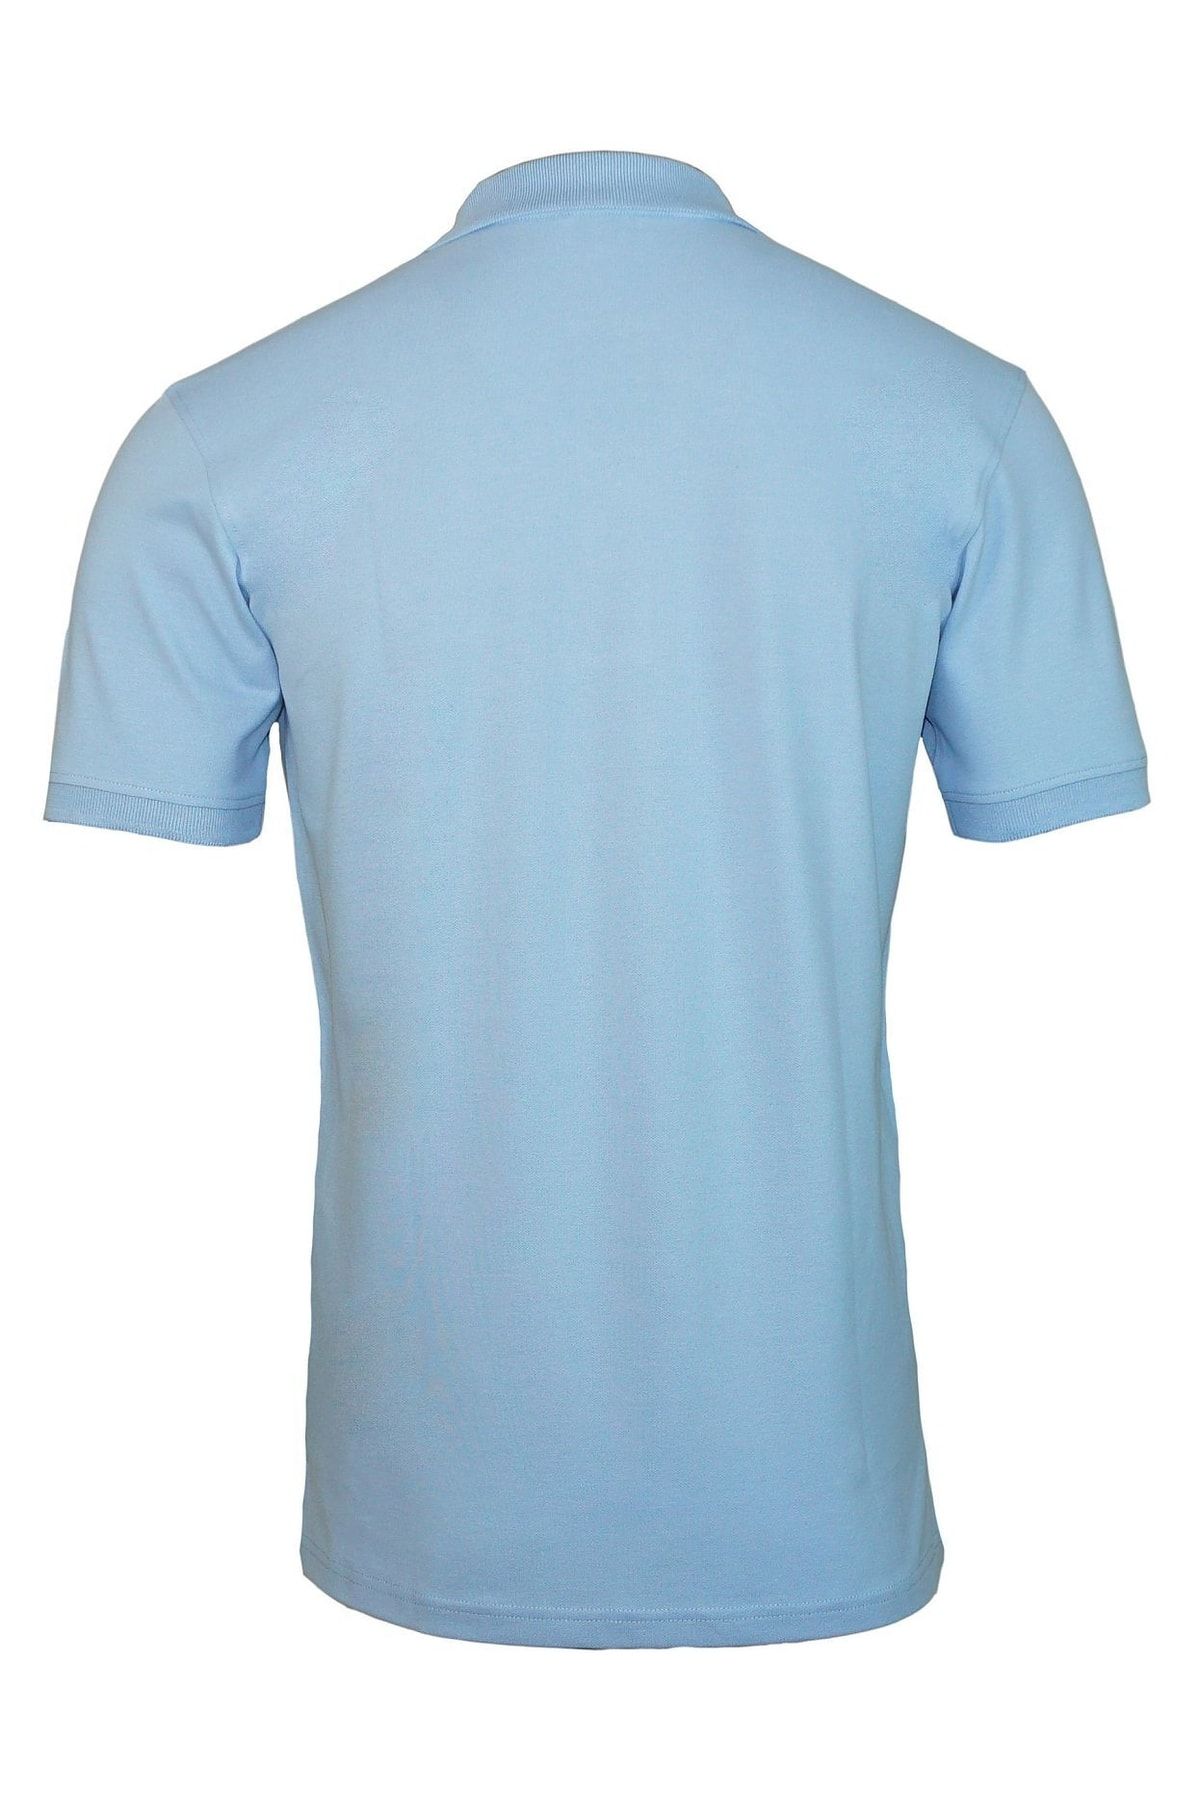 U.S. Polo Assn. Trendyol - Fit - Blau Regular Poloshirt 